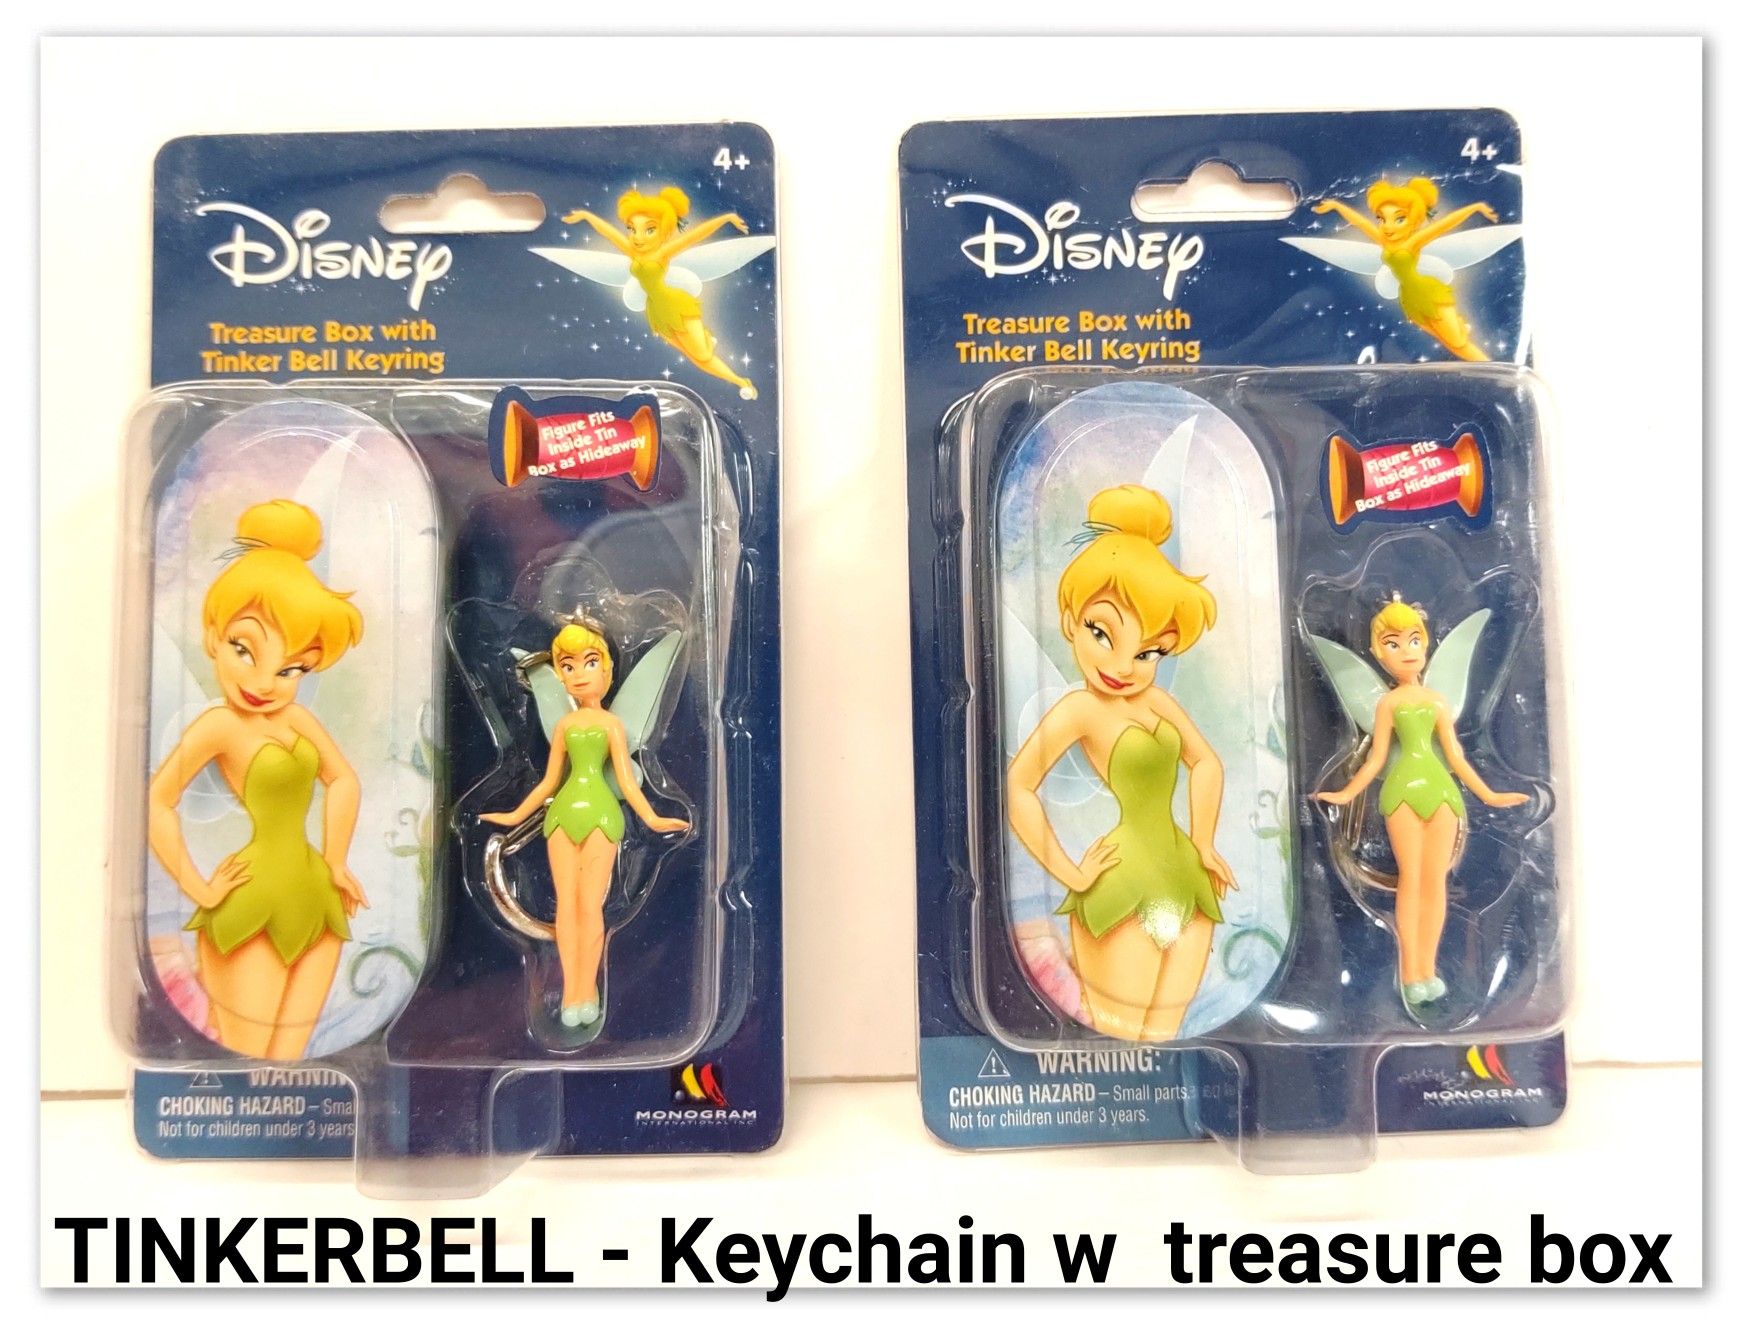 TINKERBELL - Keychain w treasure box